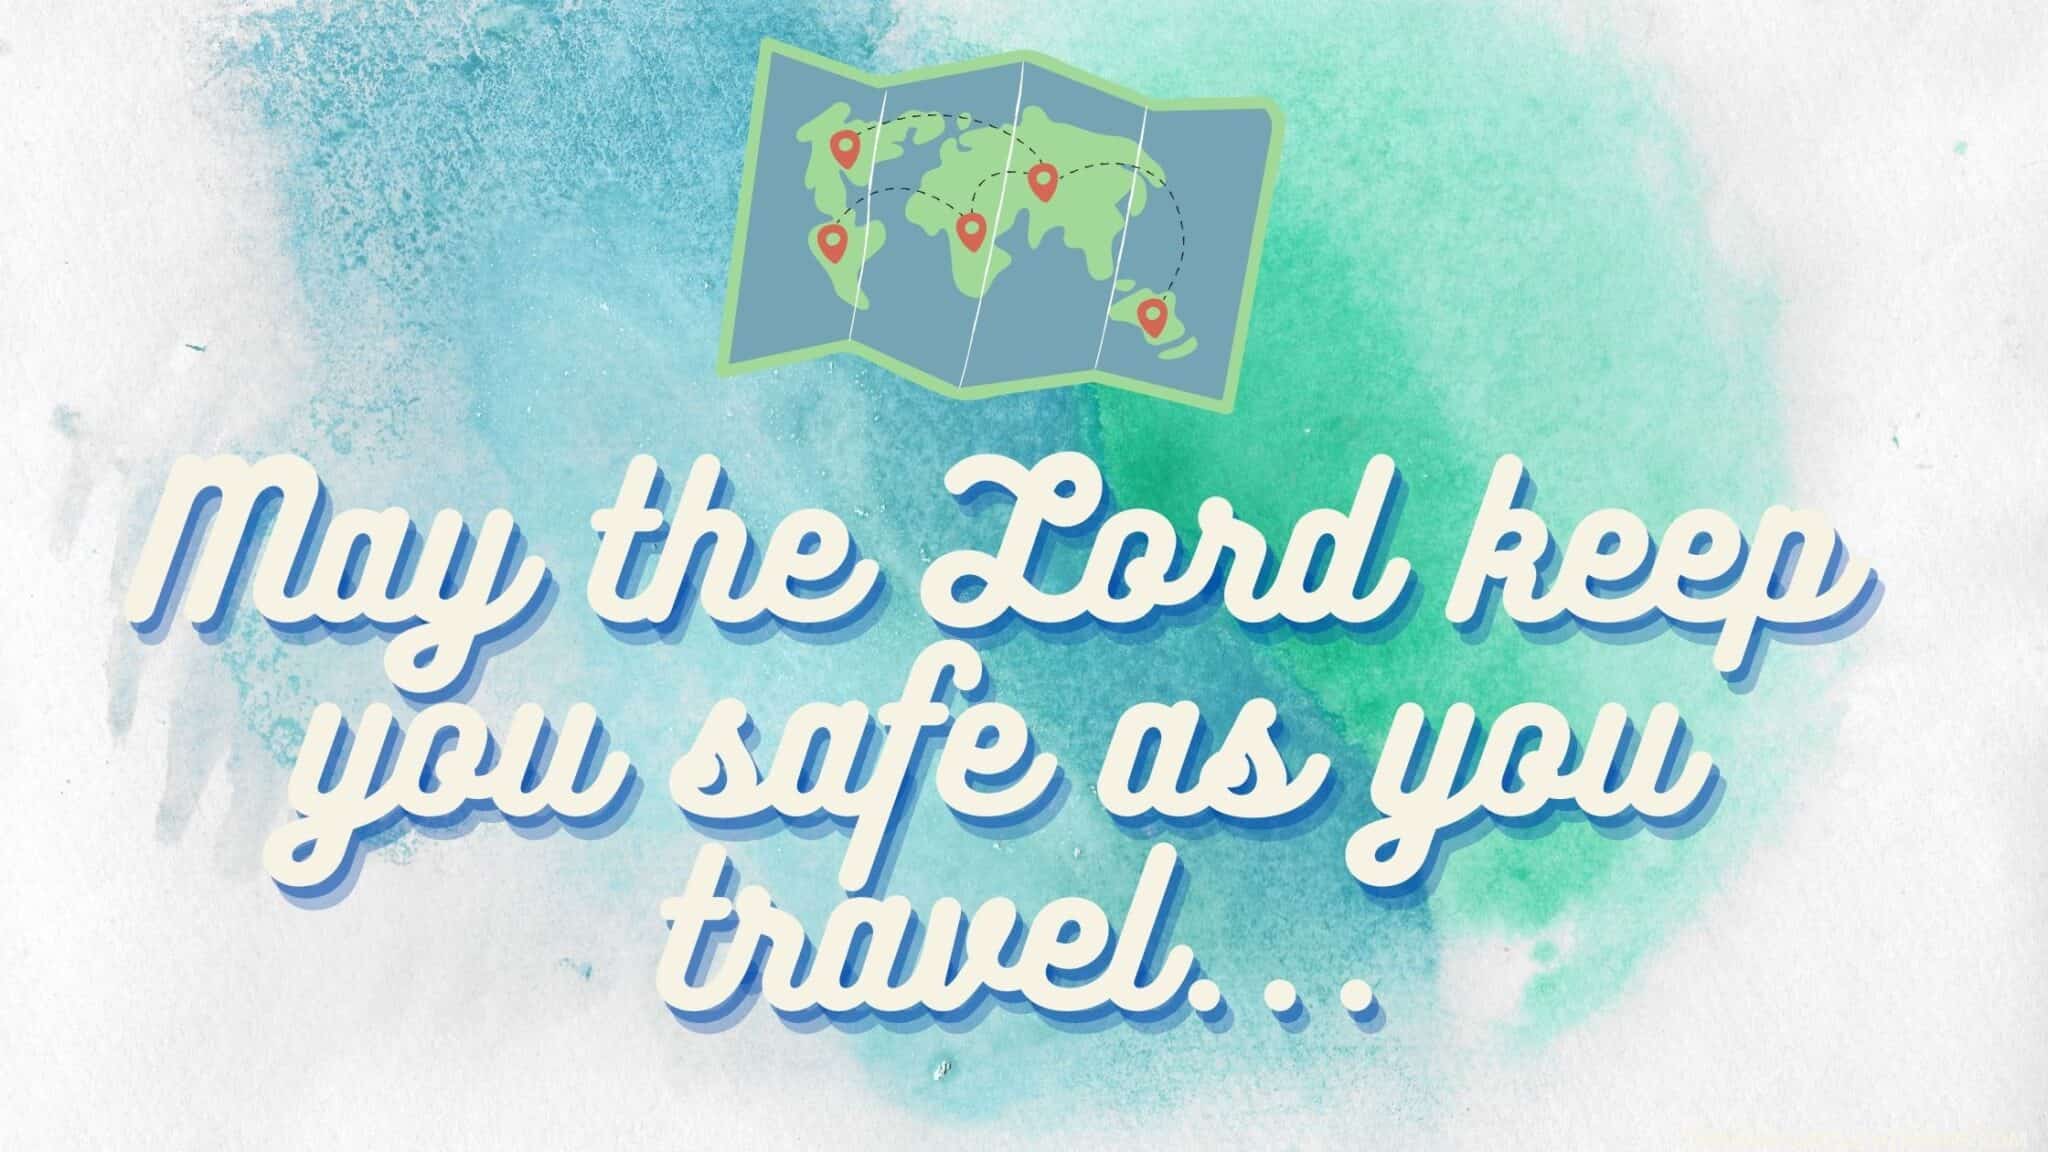 prayer for safe travel home